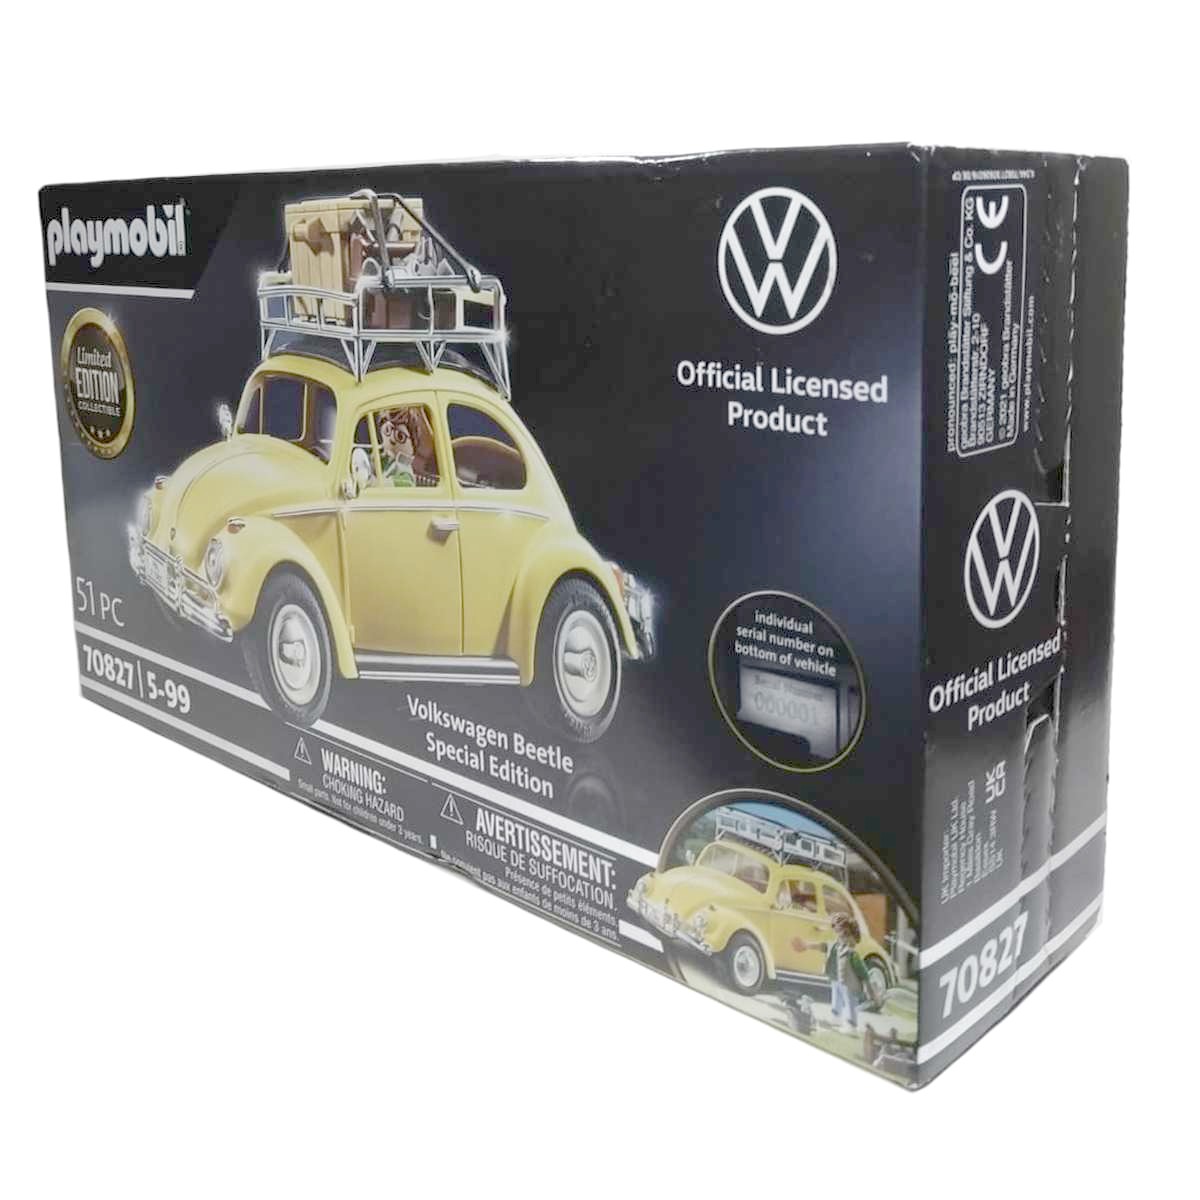 Playmobil Set: 70827 - Volkswagen Beetle - Special Edition